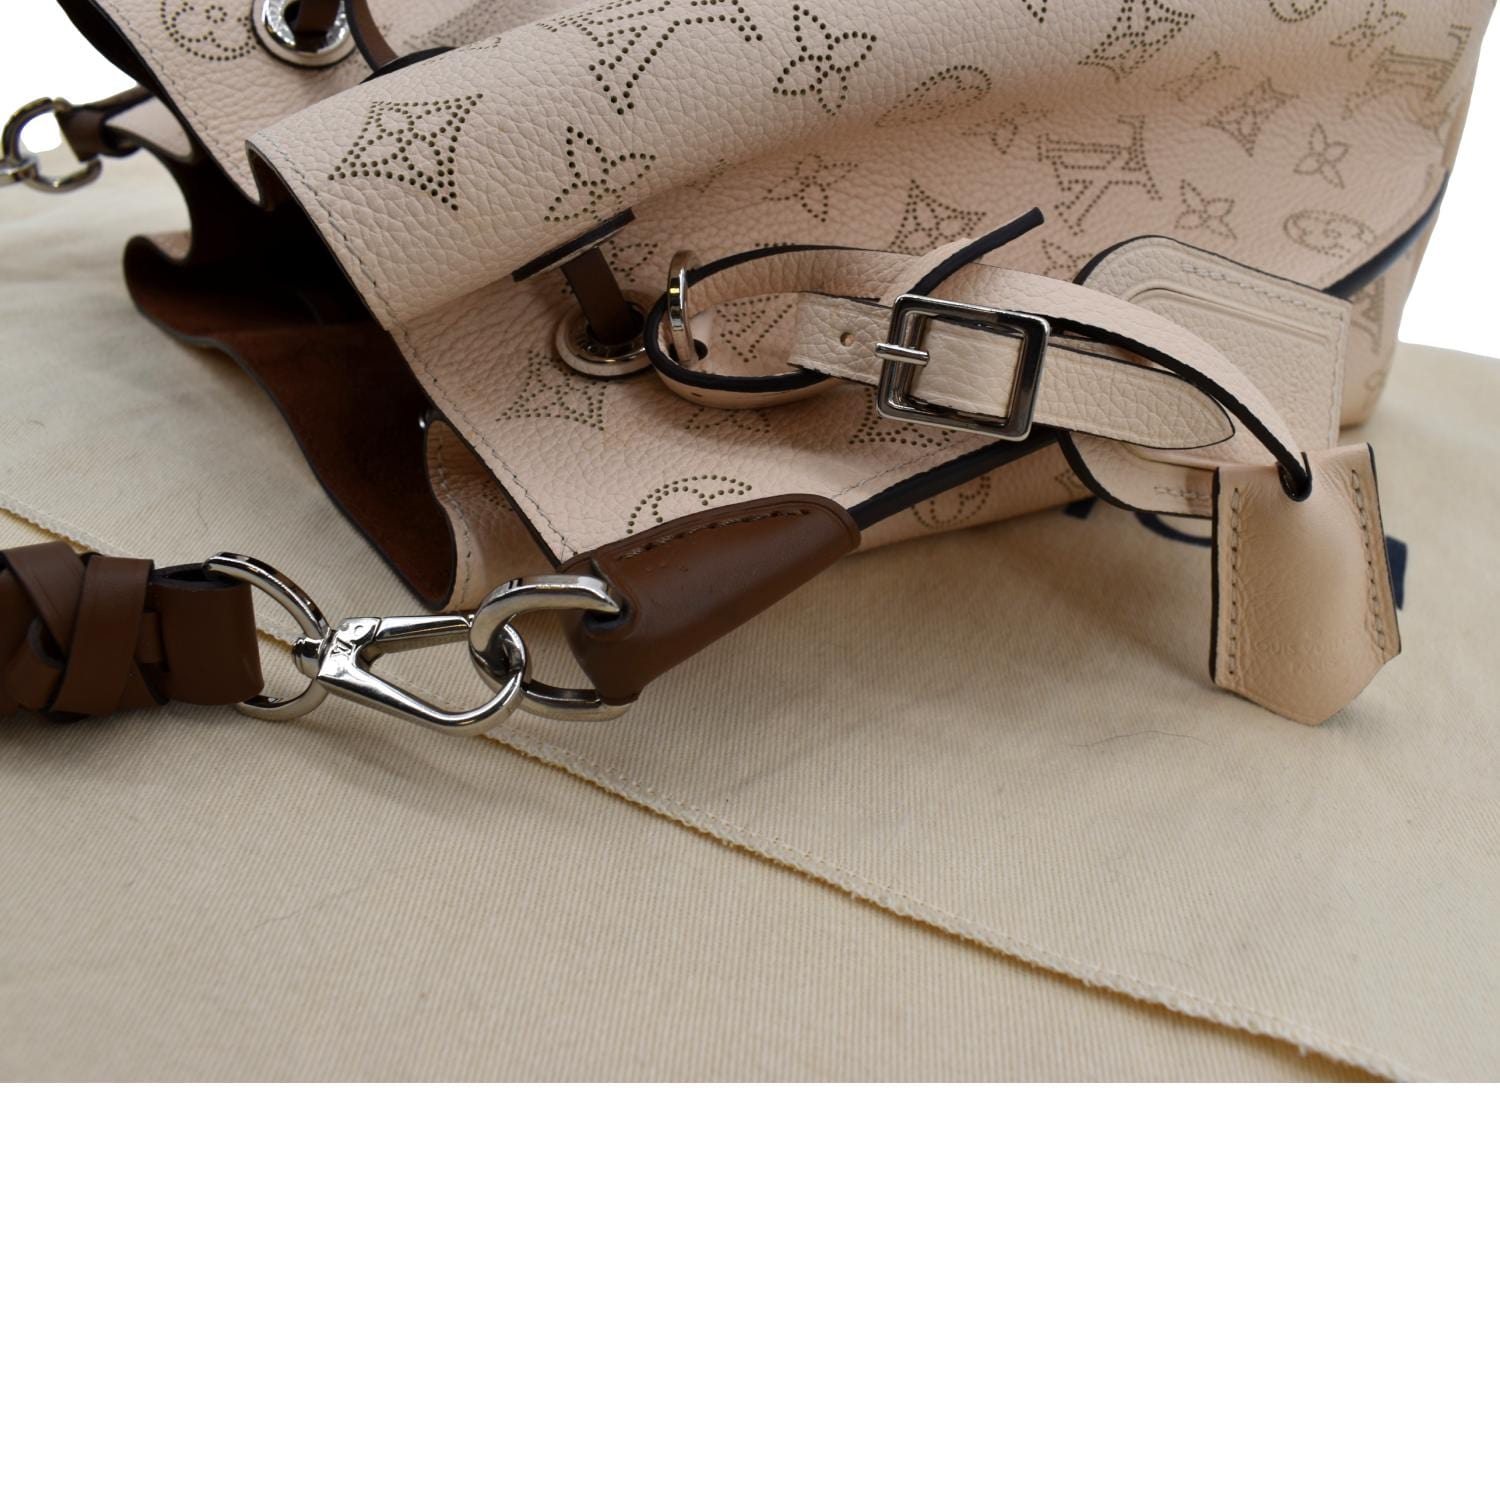 Louis Vuitton Muria Mahina Perforated Leather Crossbody Bag